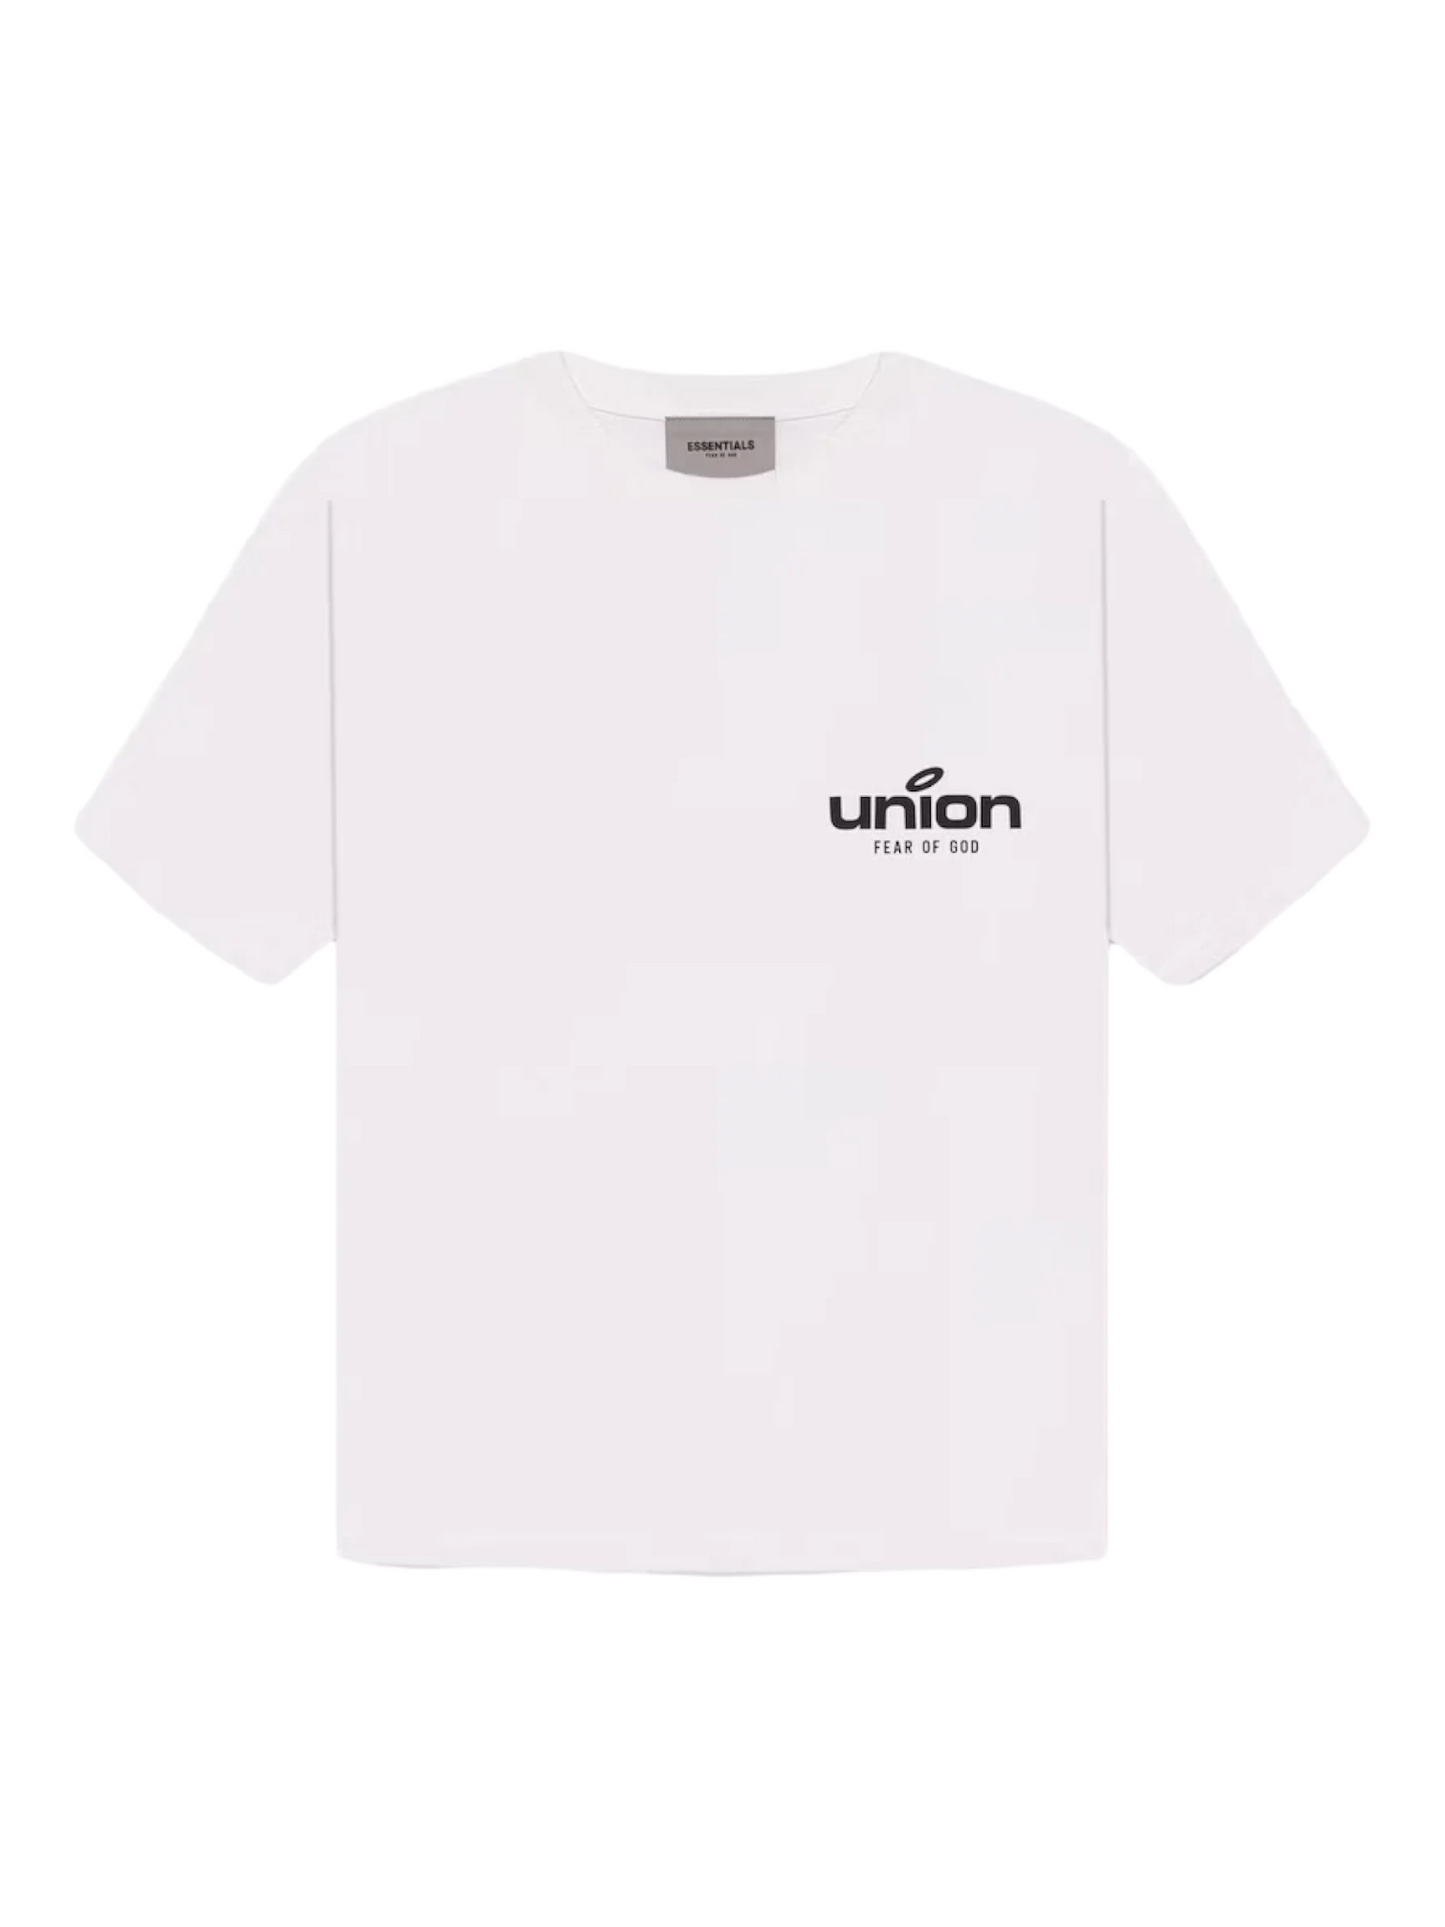 Essentials Fear of God x Union 30 Year Vintage White Shirt FW21